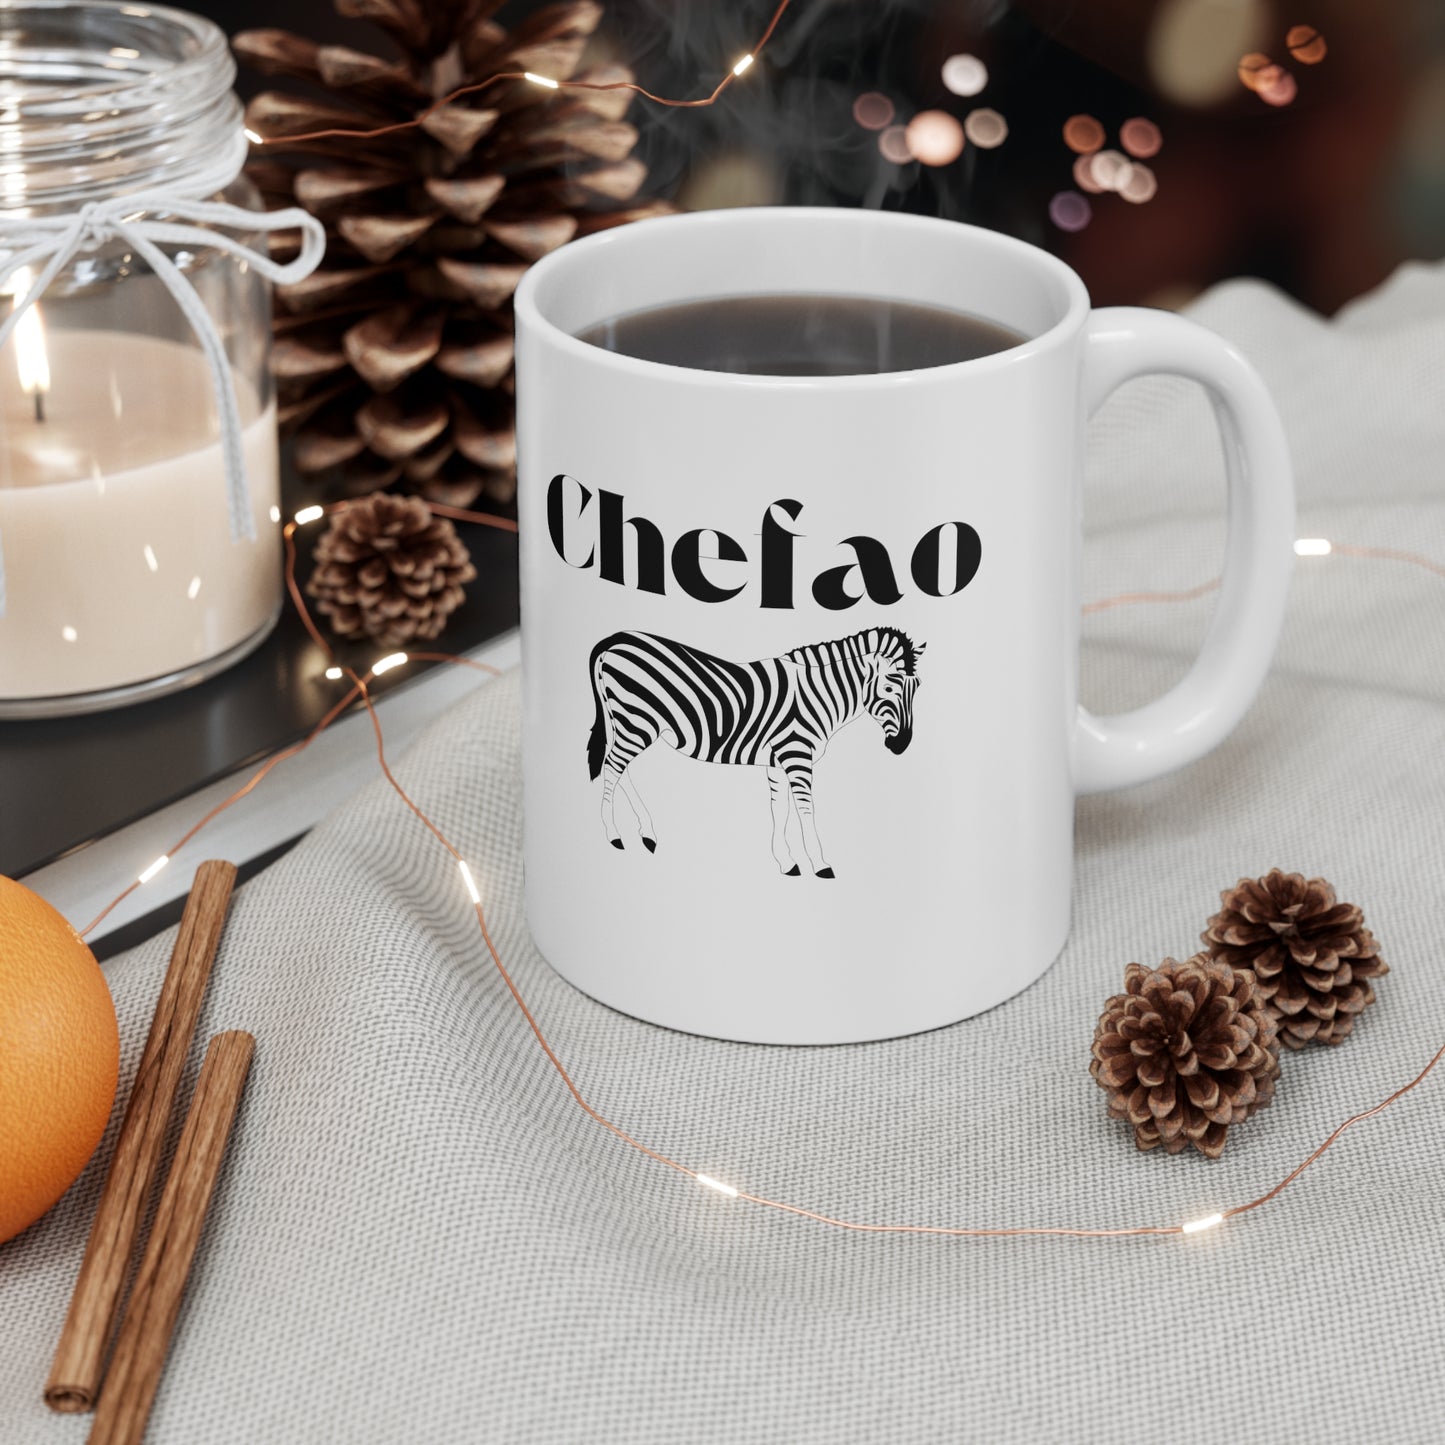 Chefao Zebra II, White Coffee Mug, 11oz